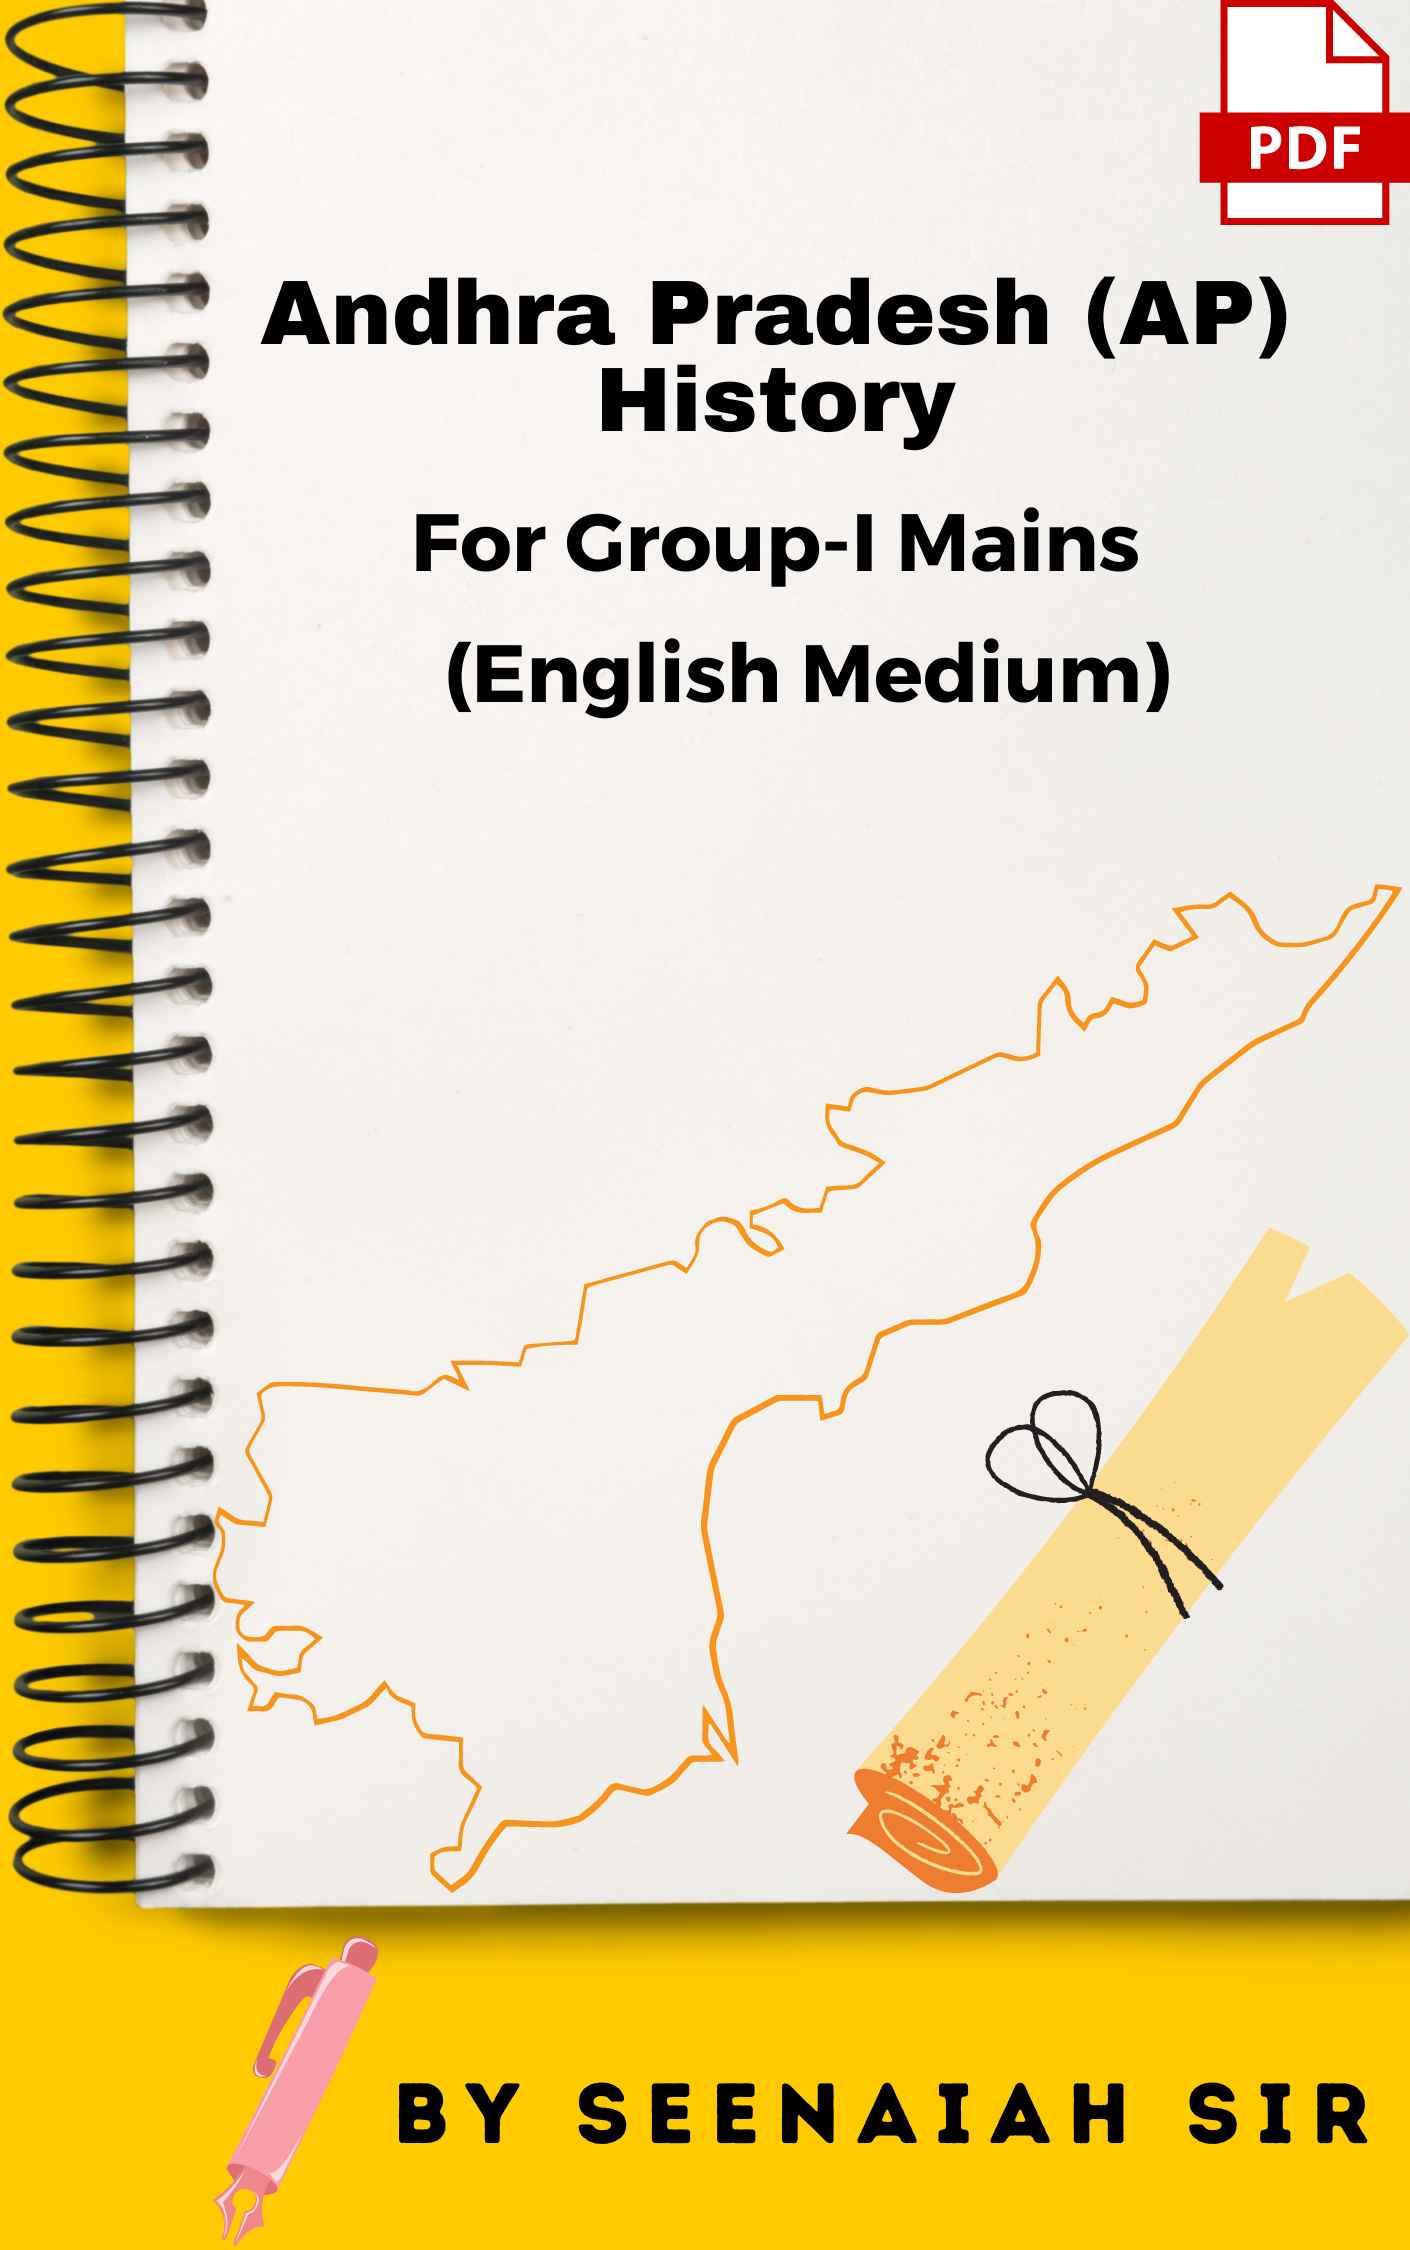 Andhra Pradesh (AP) History for Group-I Mains (Hand Written Class Notes English Medium) - PDF